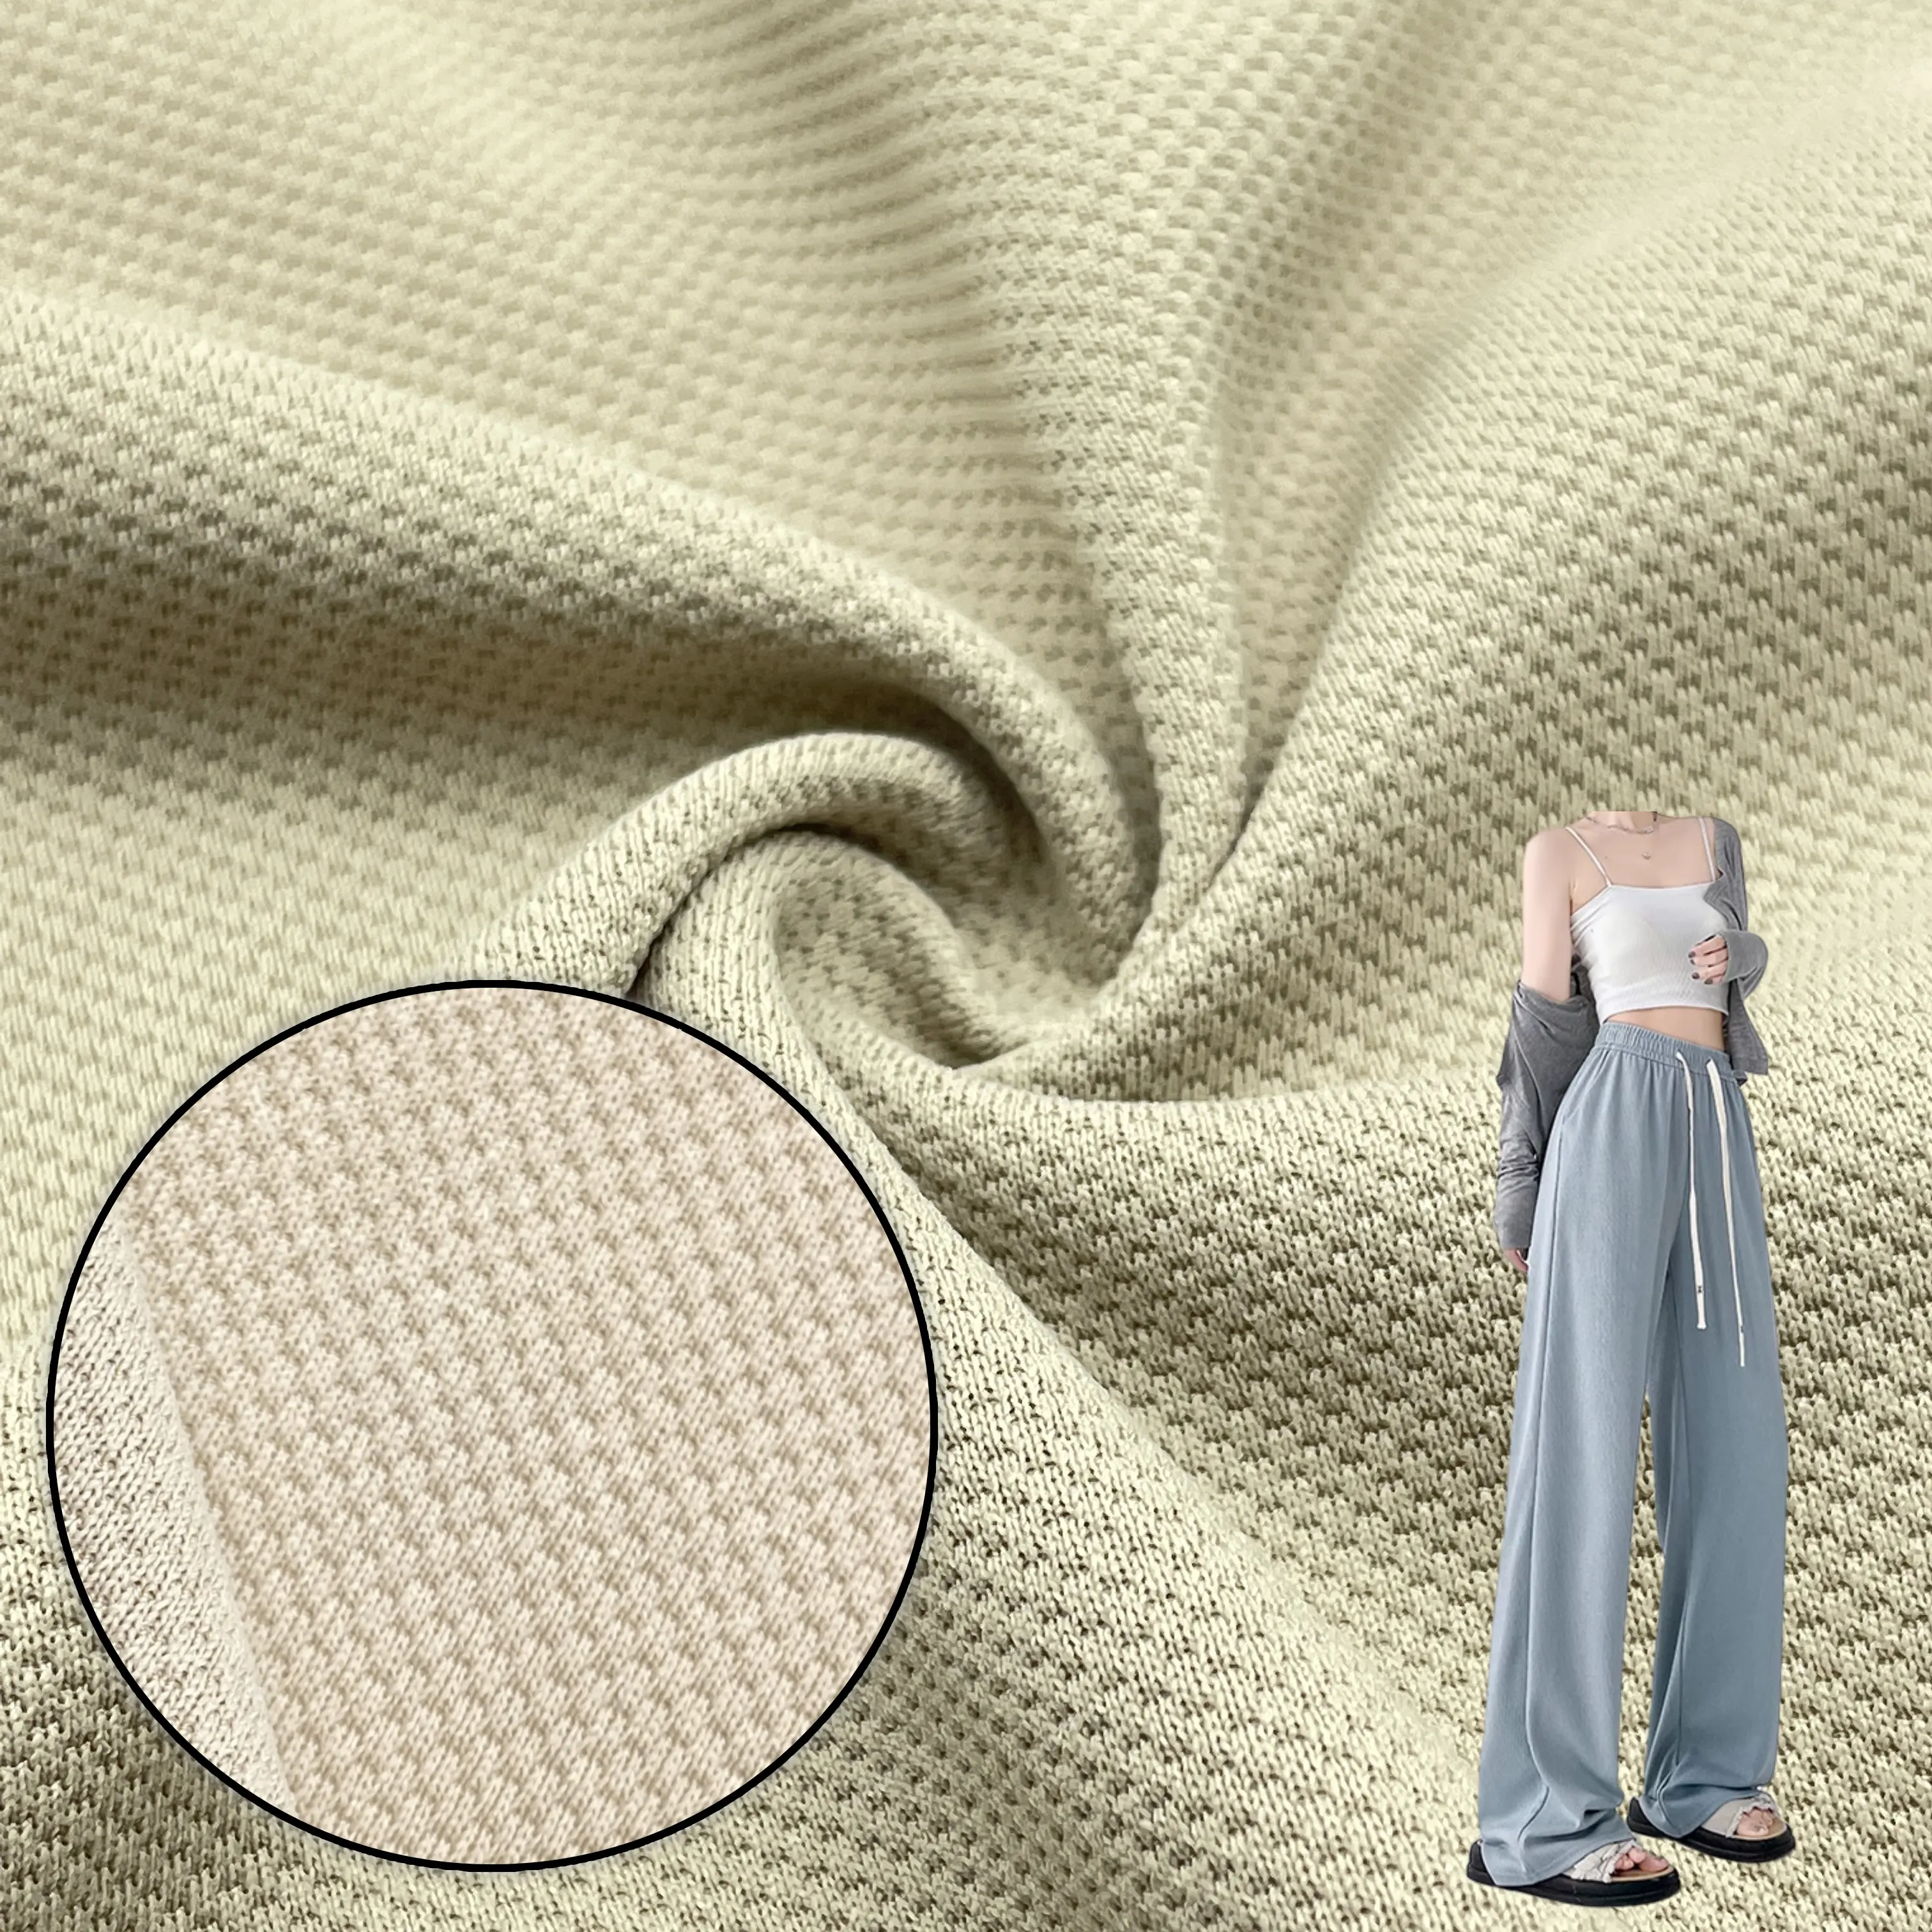 Pabrik Tekstil dicelup rajutan pola nanas kain celana kasual mode poliester kain spandeks untuk celana